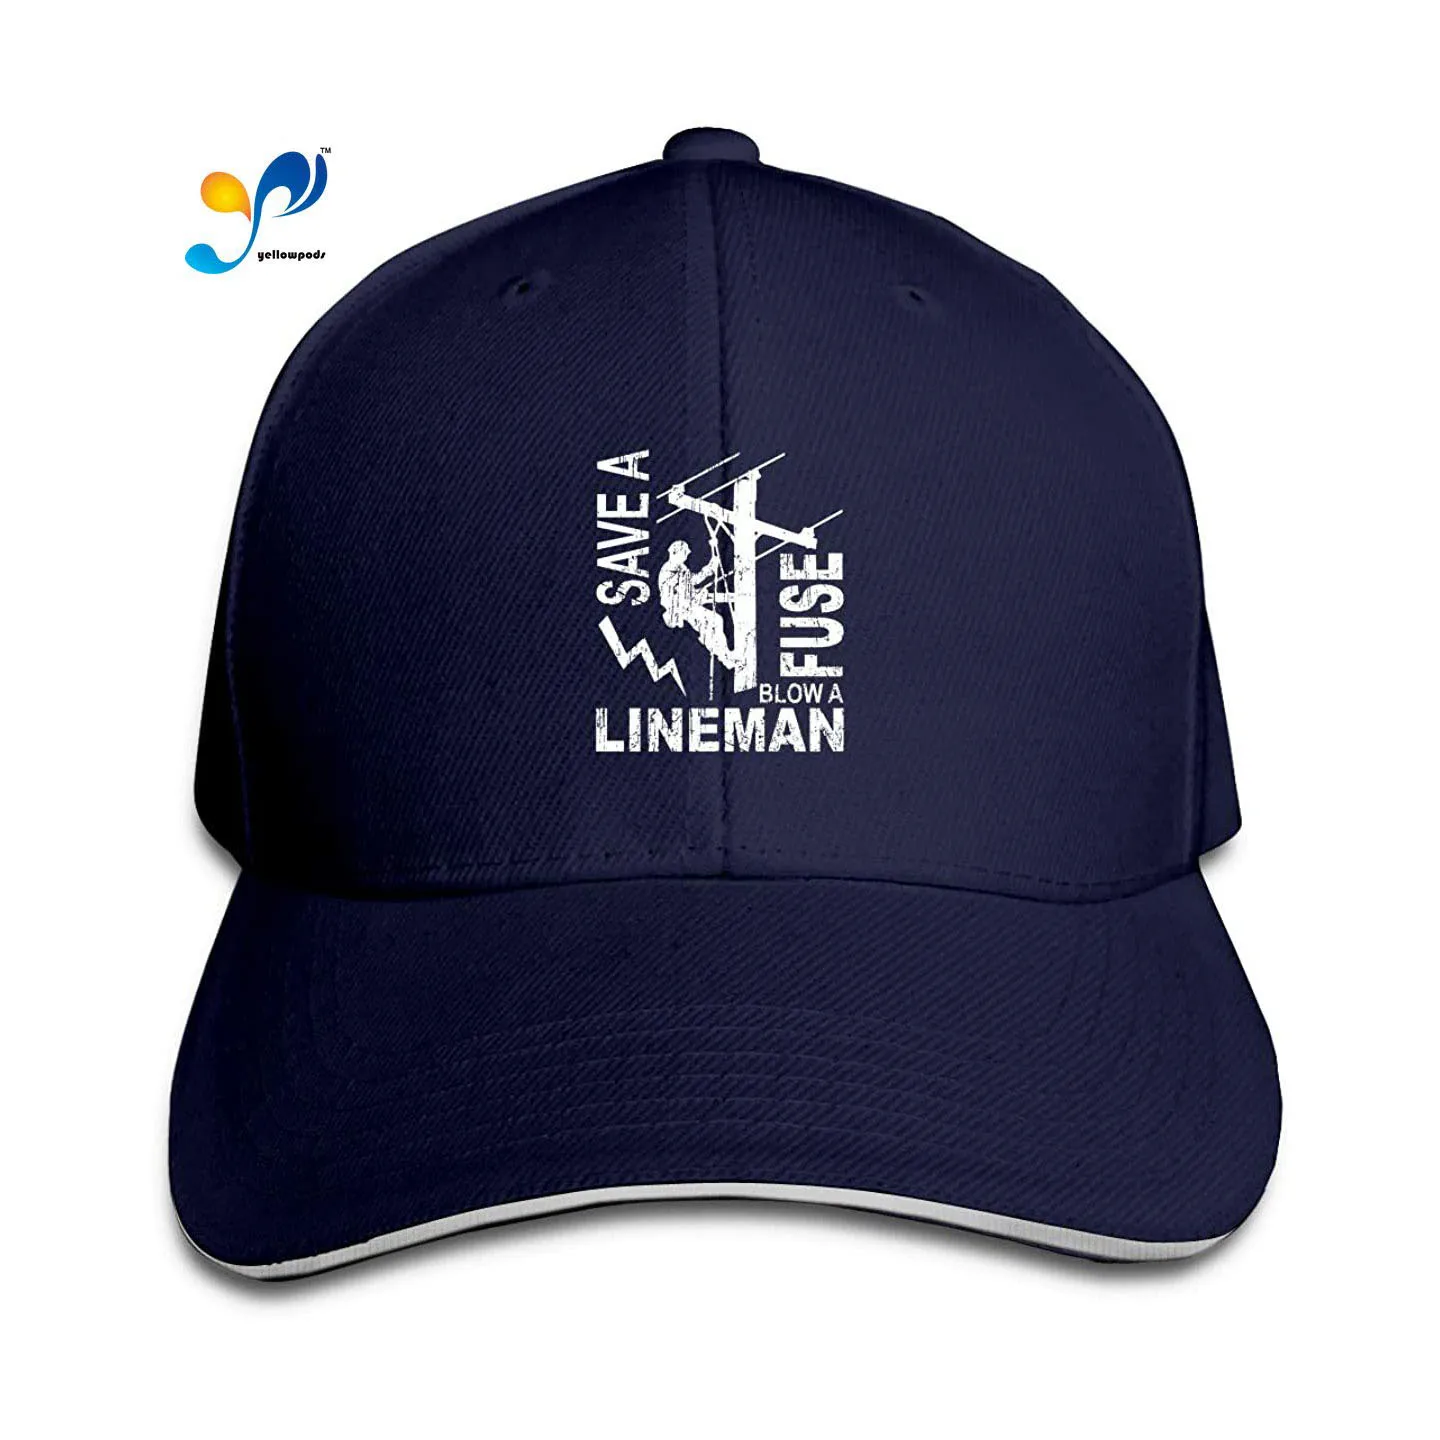 

Lineman Save A Fuse - Blow A Lineman - Linemen Men's Women's Classical Hat Fashionable Peak Cap Hunting Cap Moto Gp Baseball Cap